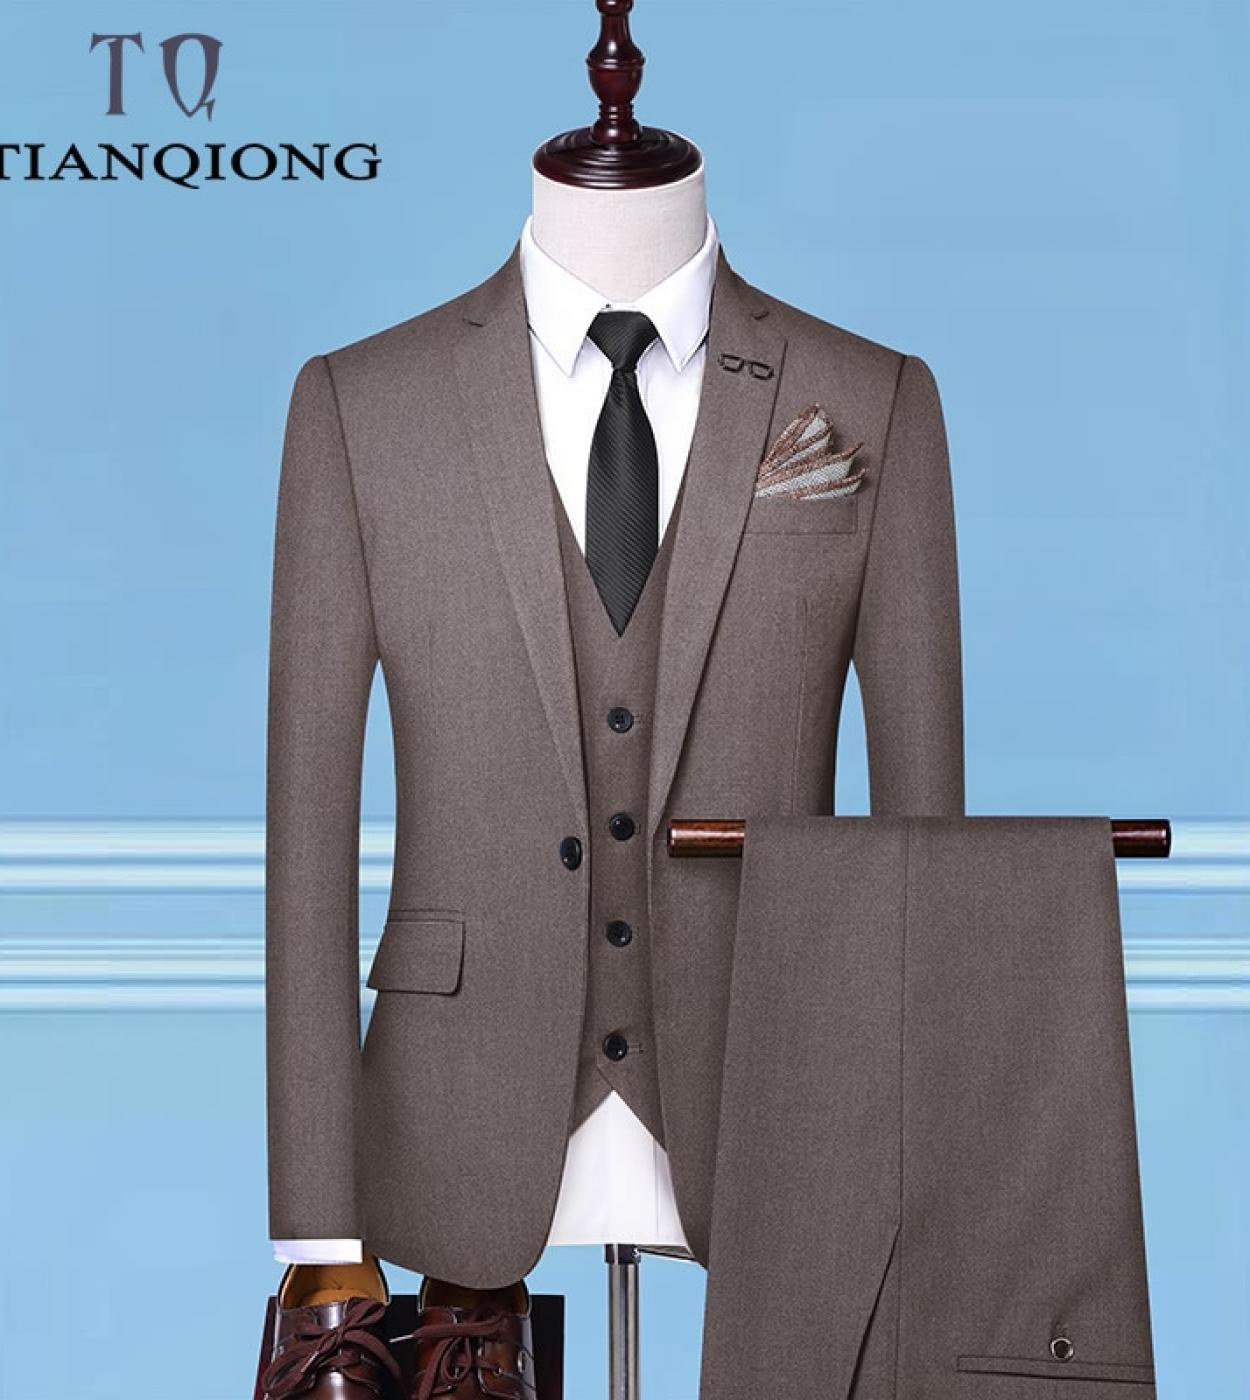 jacketvestpantsmens Business Suit Casual High Quality Single Button Wedding Male Solid Color 3 Piece Suits Sets Bla